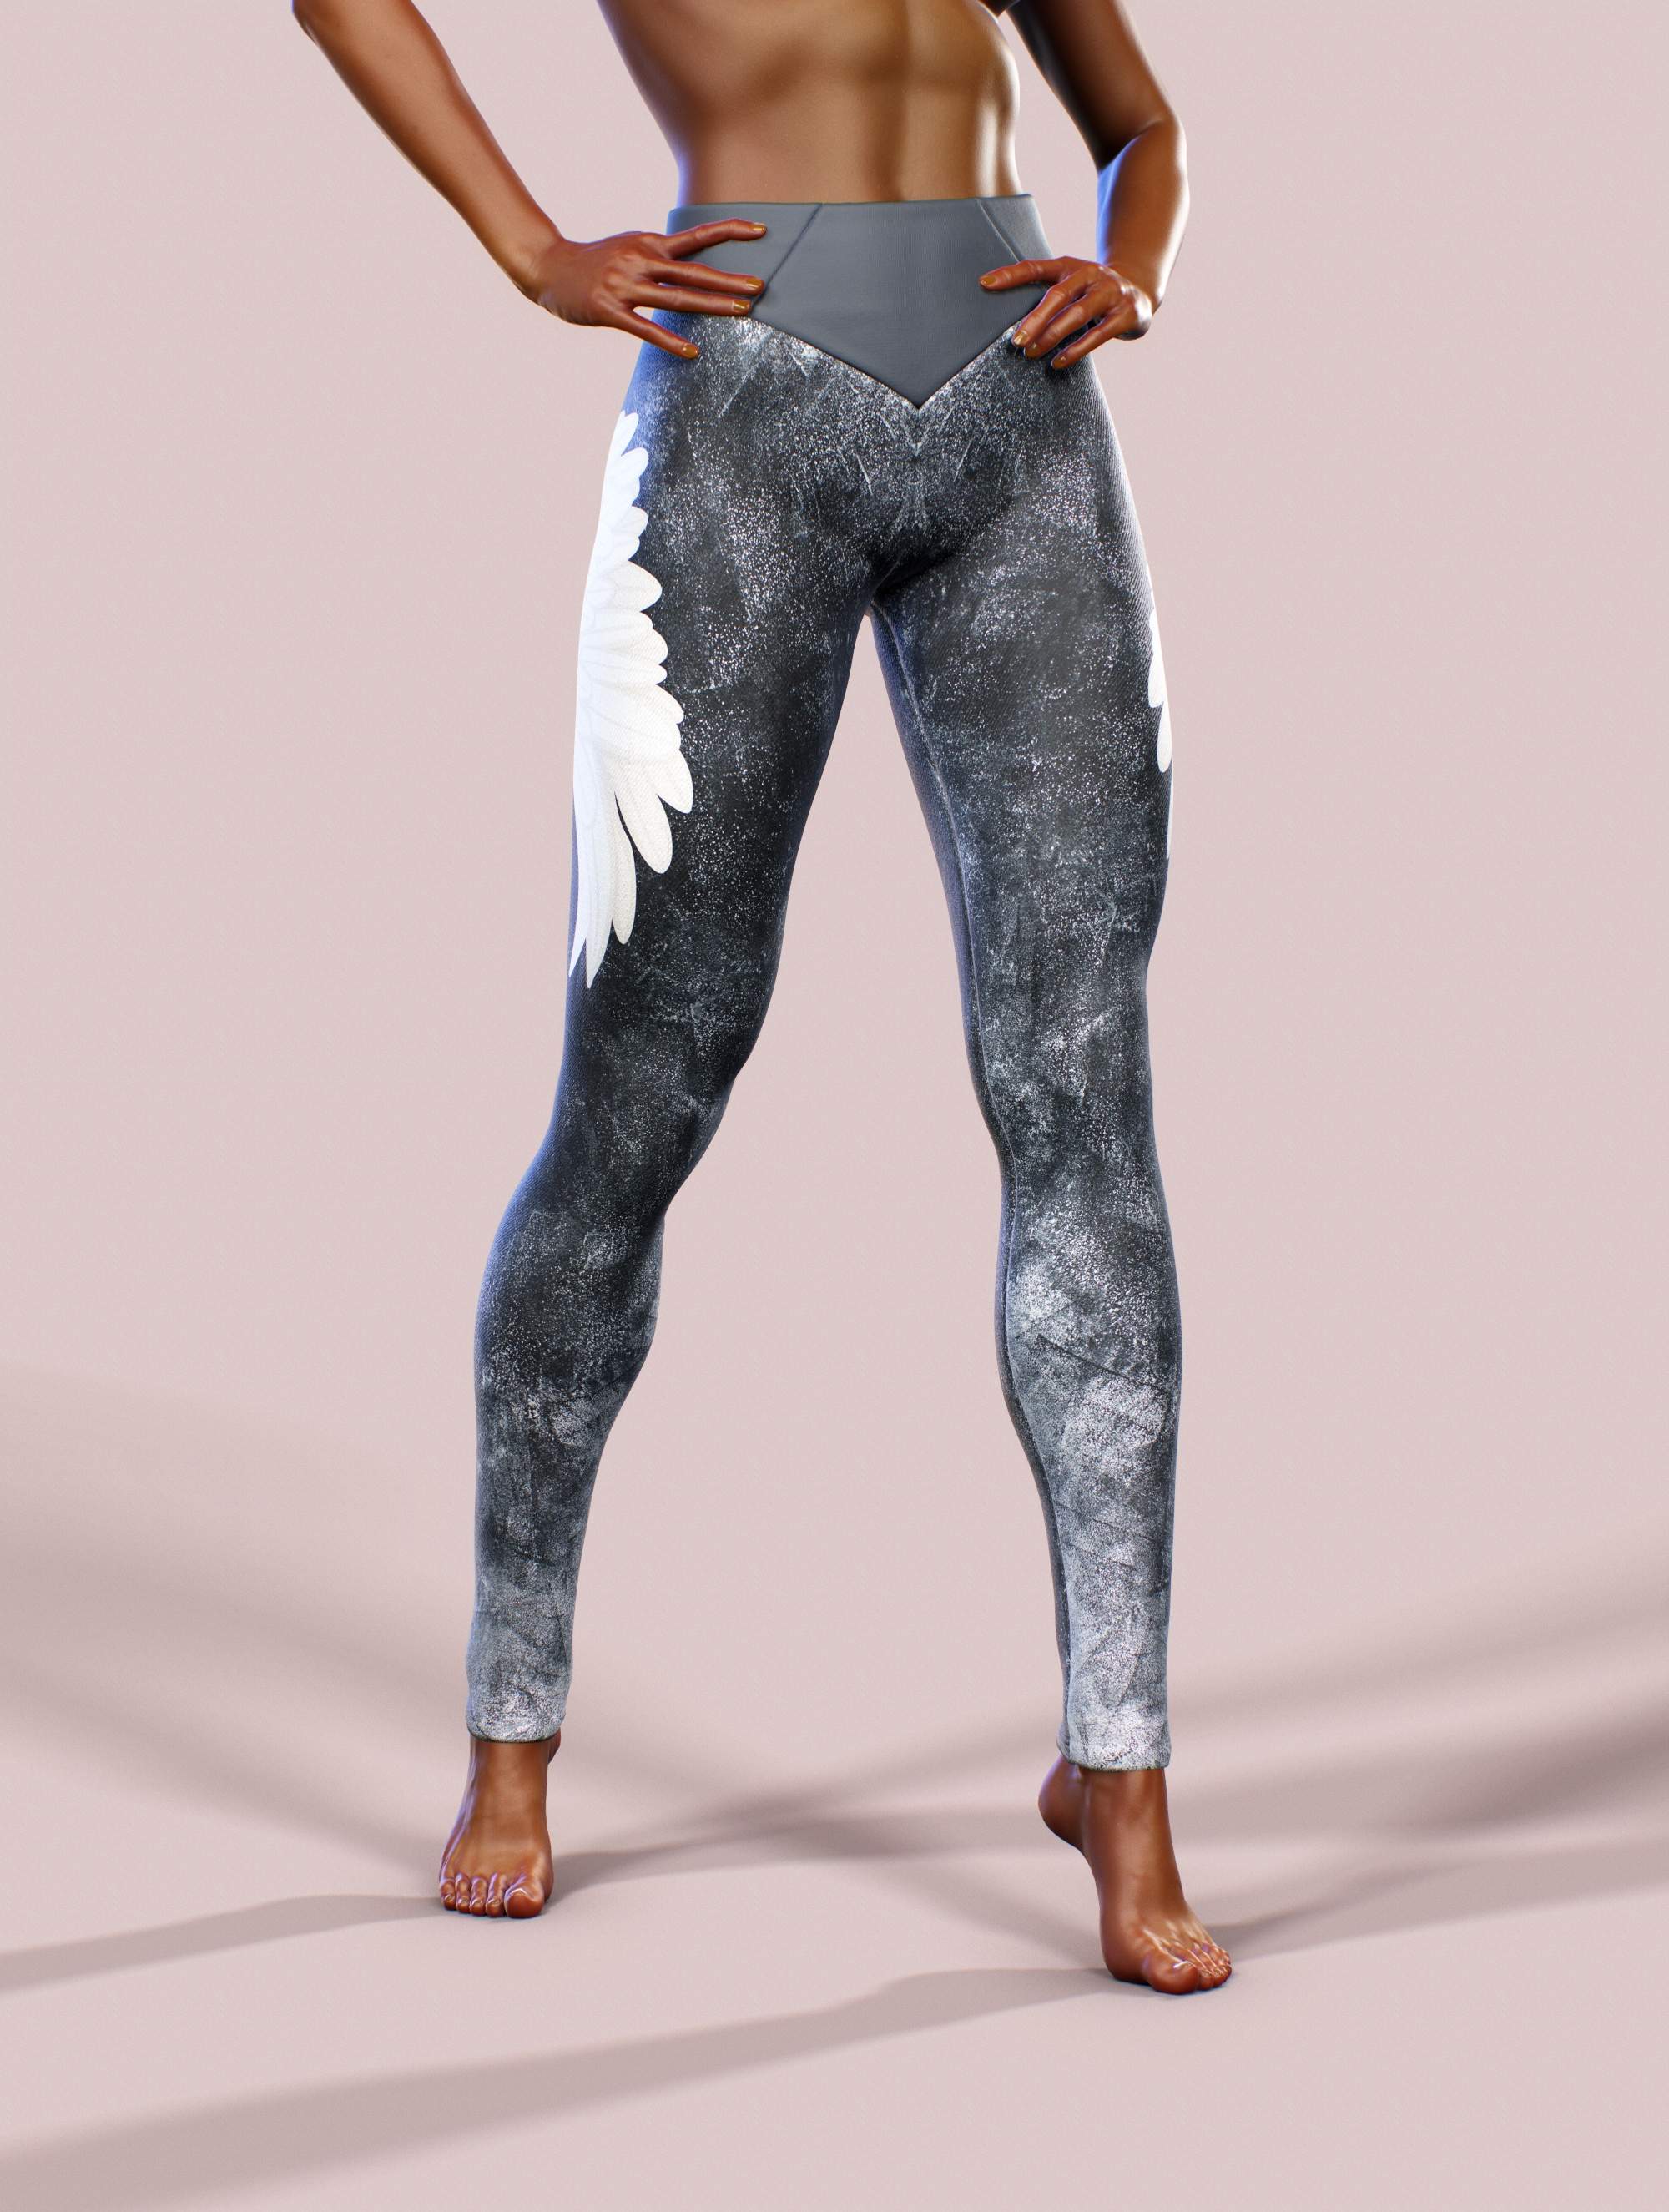 Guardian Wings Yoga Pants, High Waisted Leggings